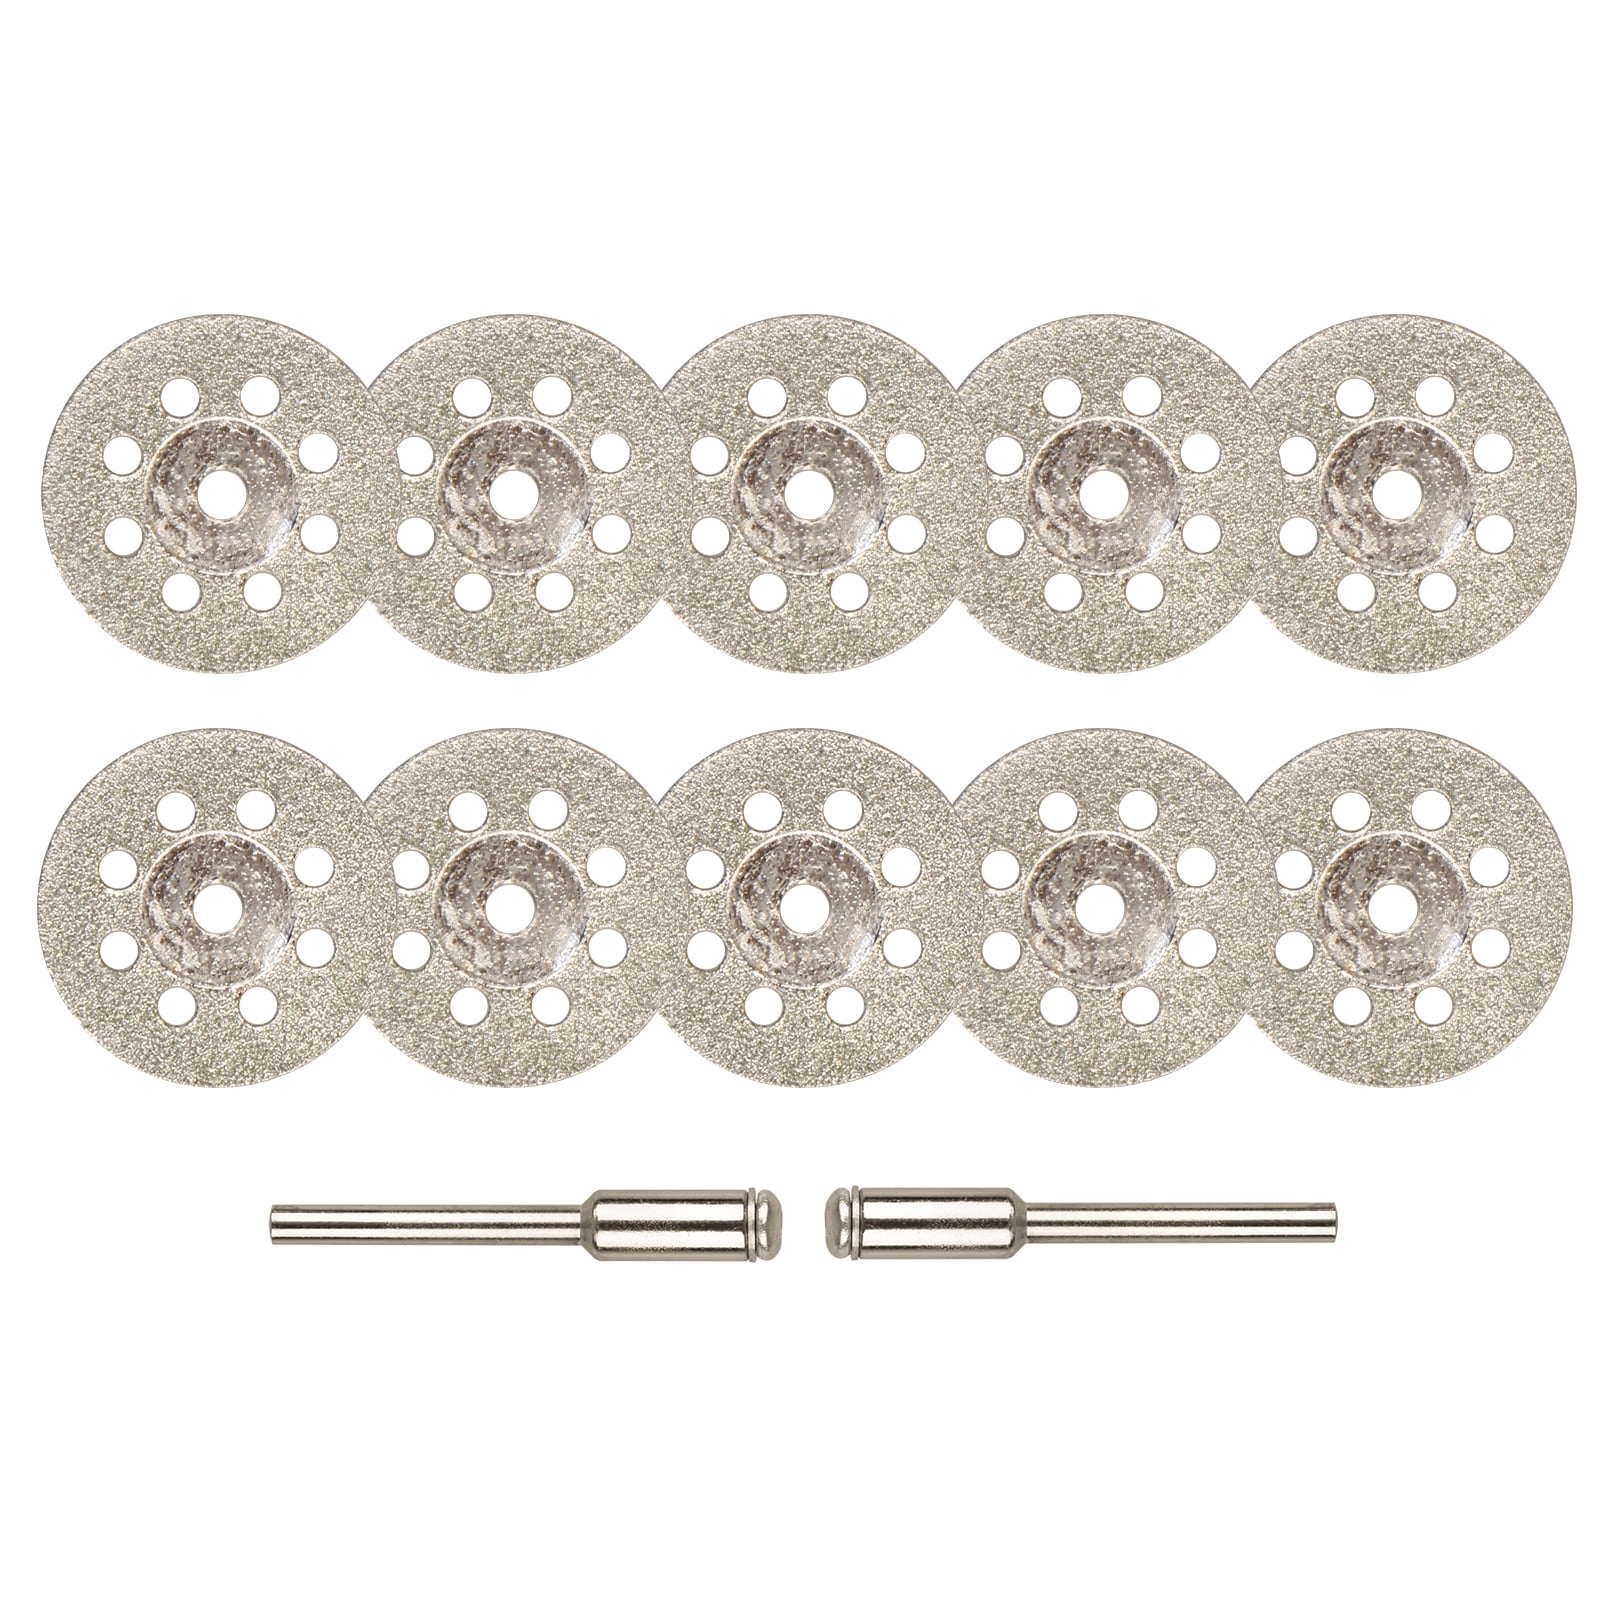 Diamond Cutting Wheel Saw Blades Cut Off Discs Set For Rotary Tools 10pcs 